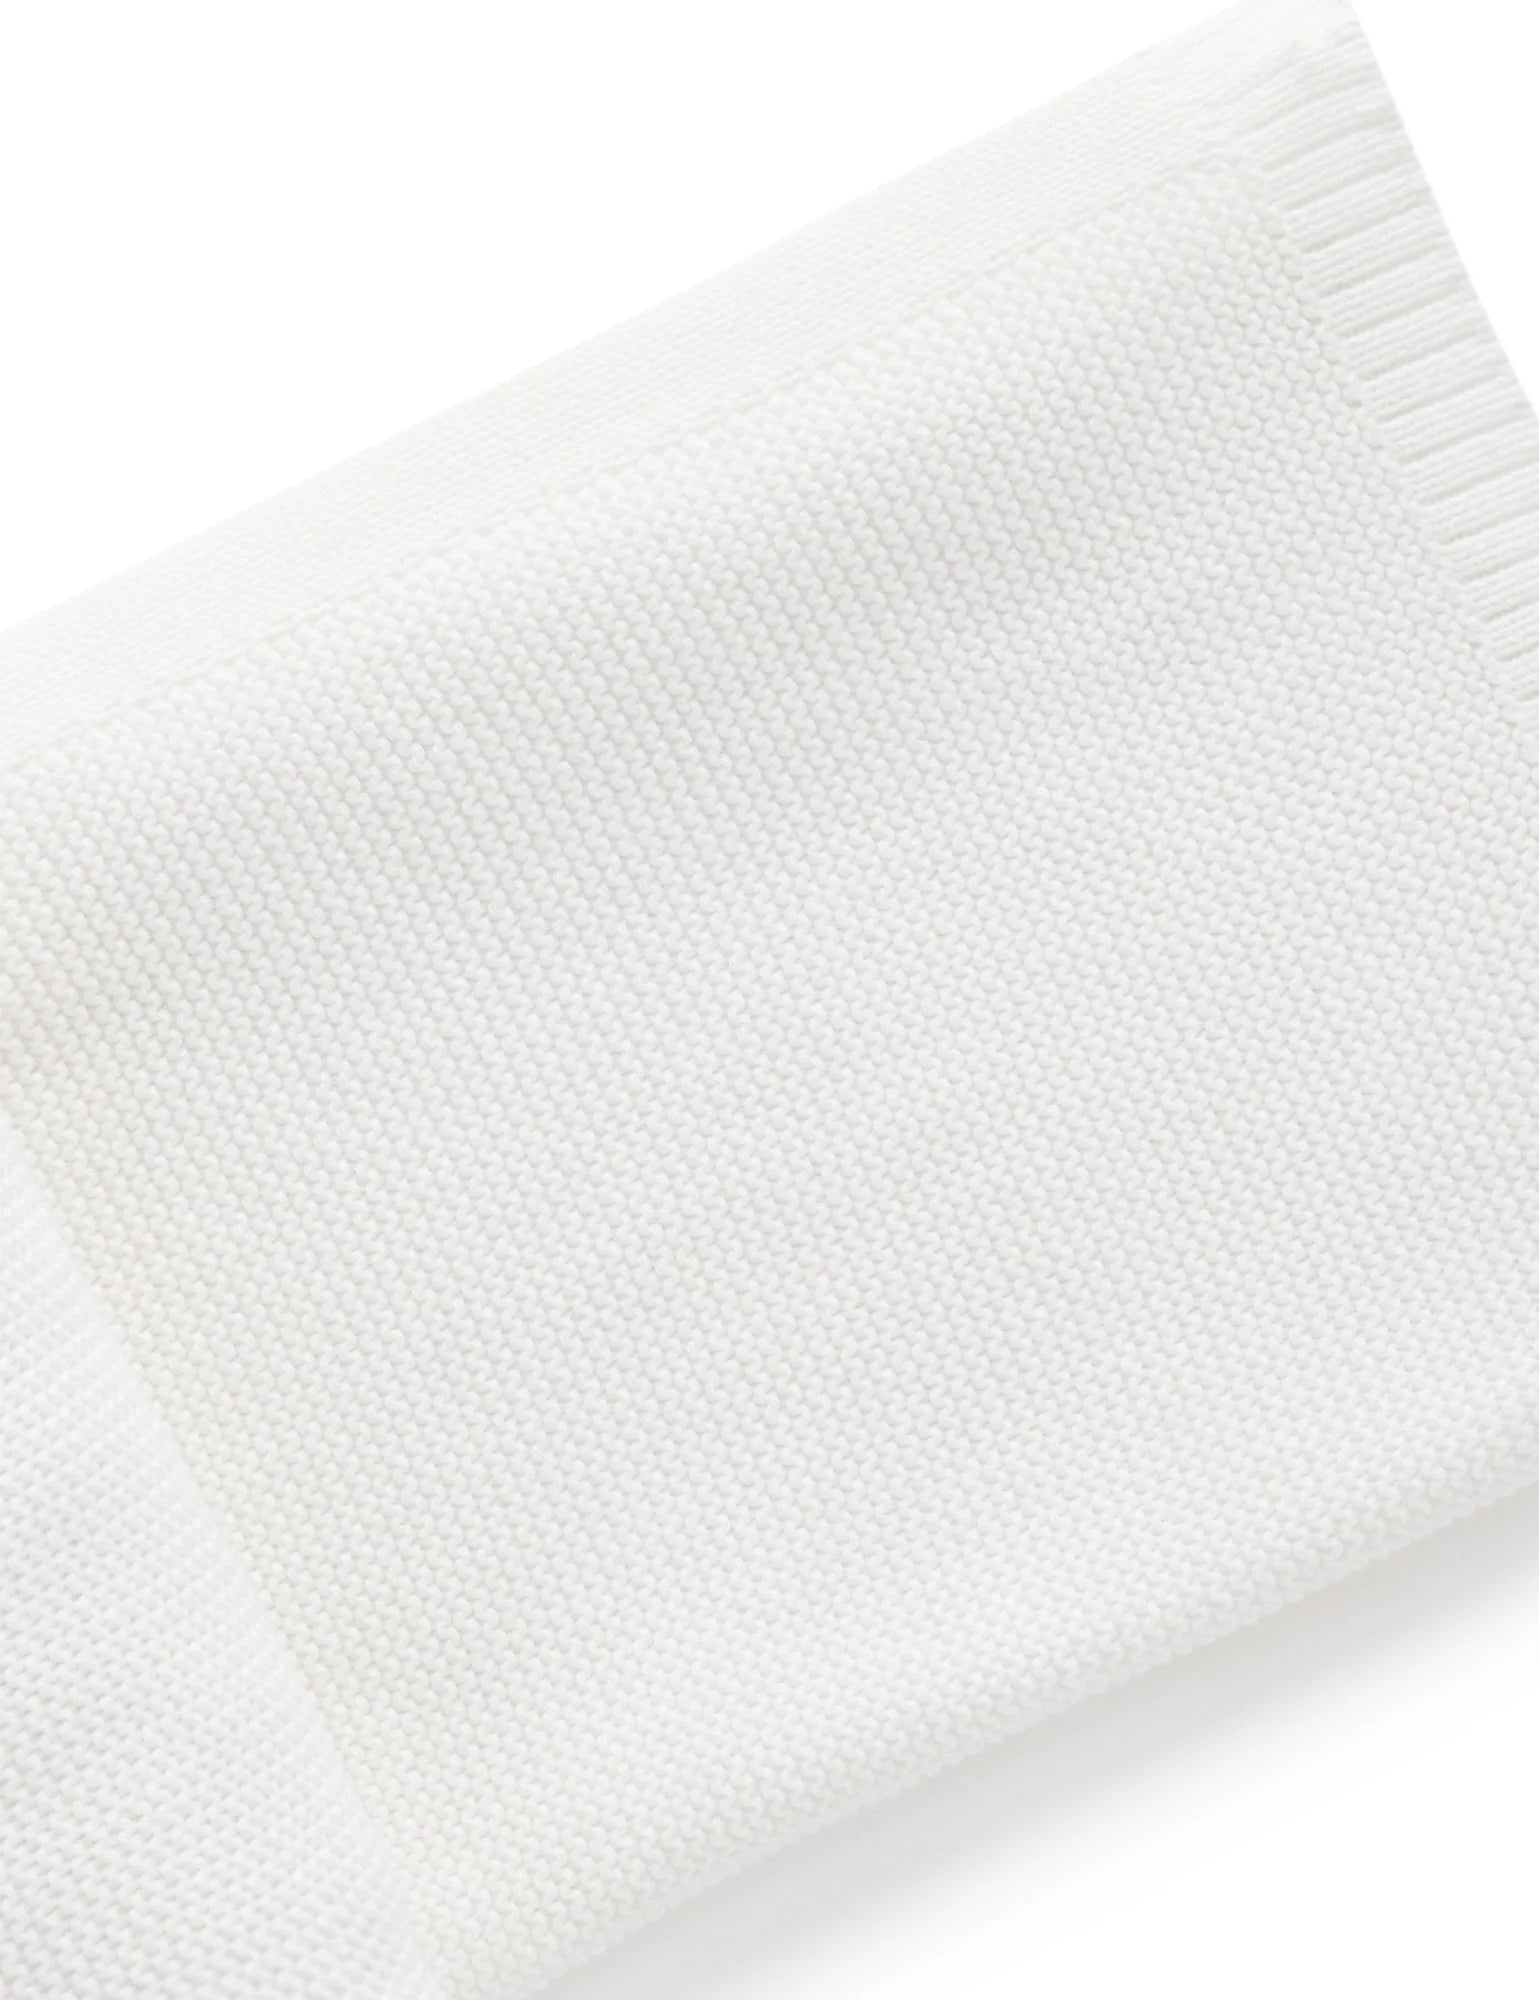 Purebaby Textured Blanket - White